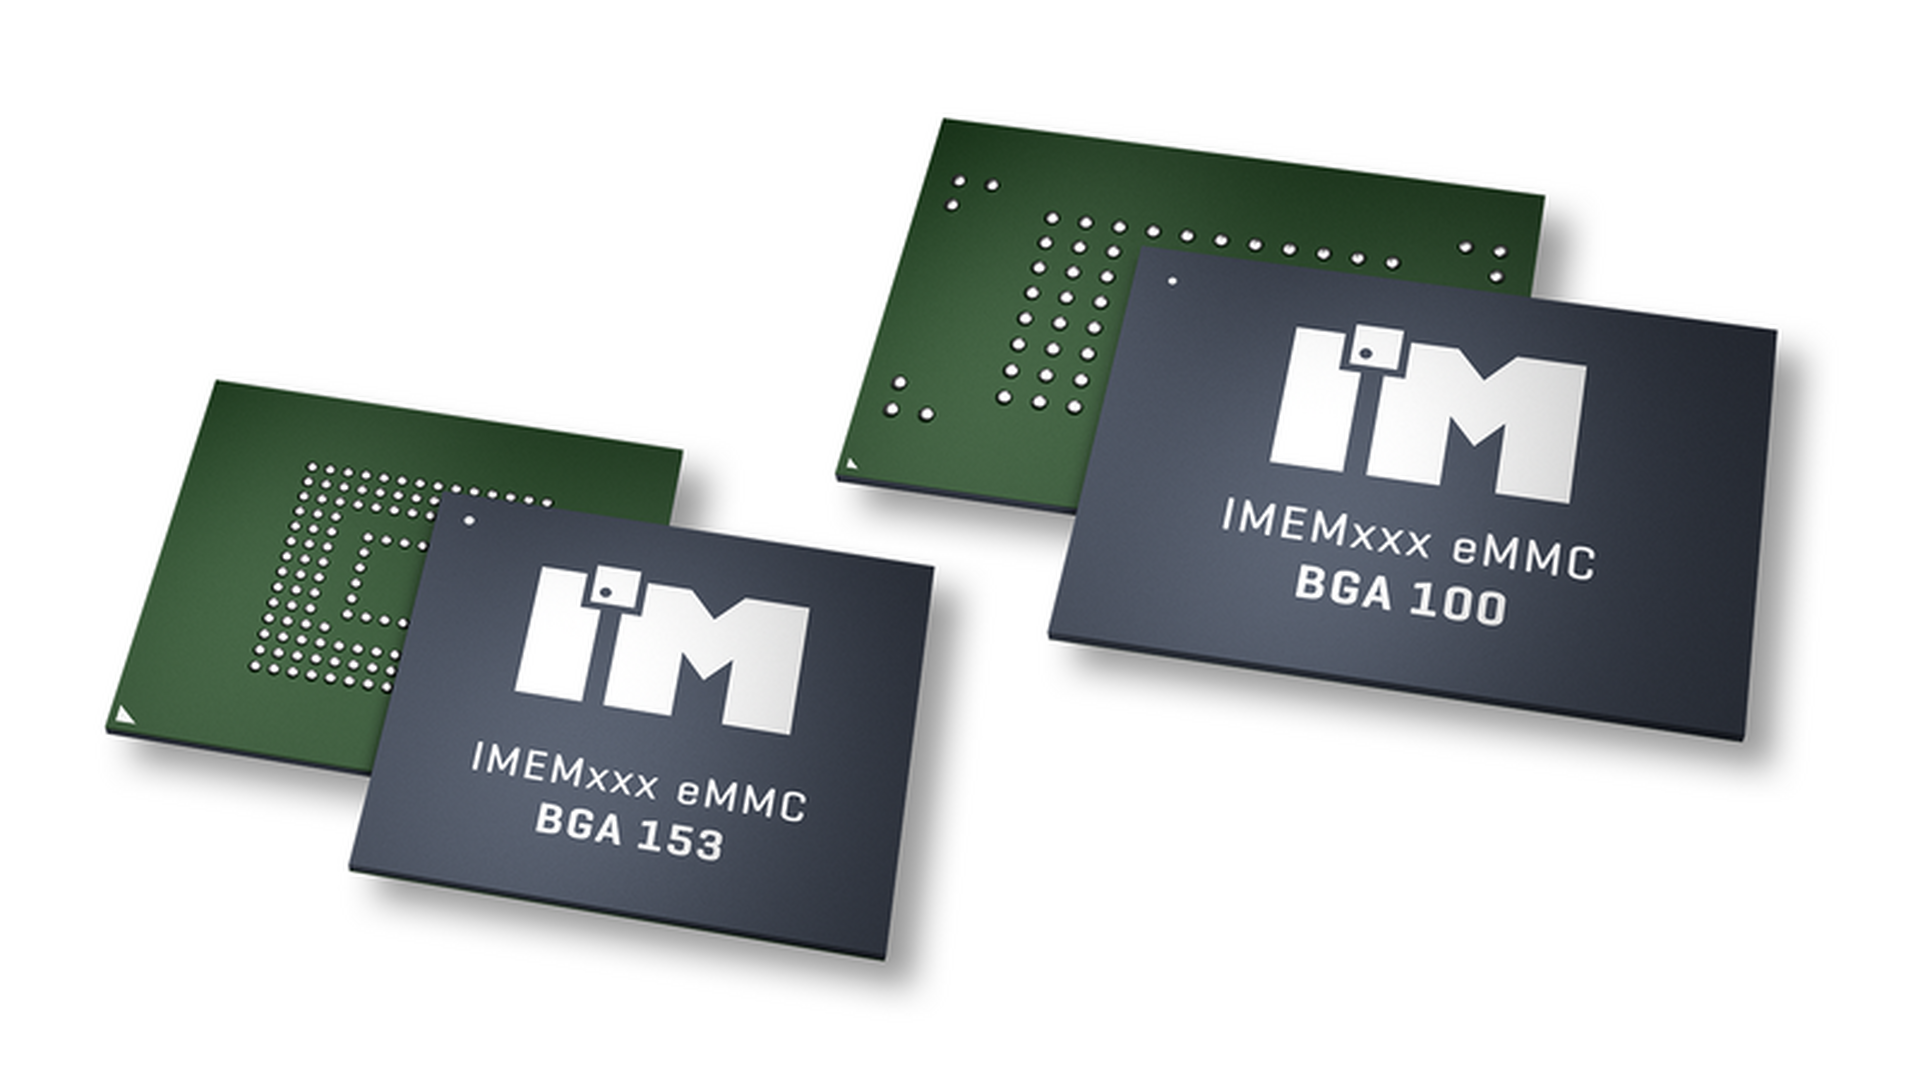 Csm e MMC Embedded Image Size 1920x1080 90dc40b420